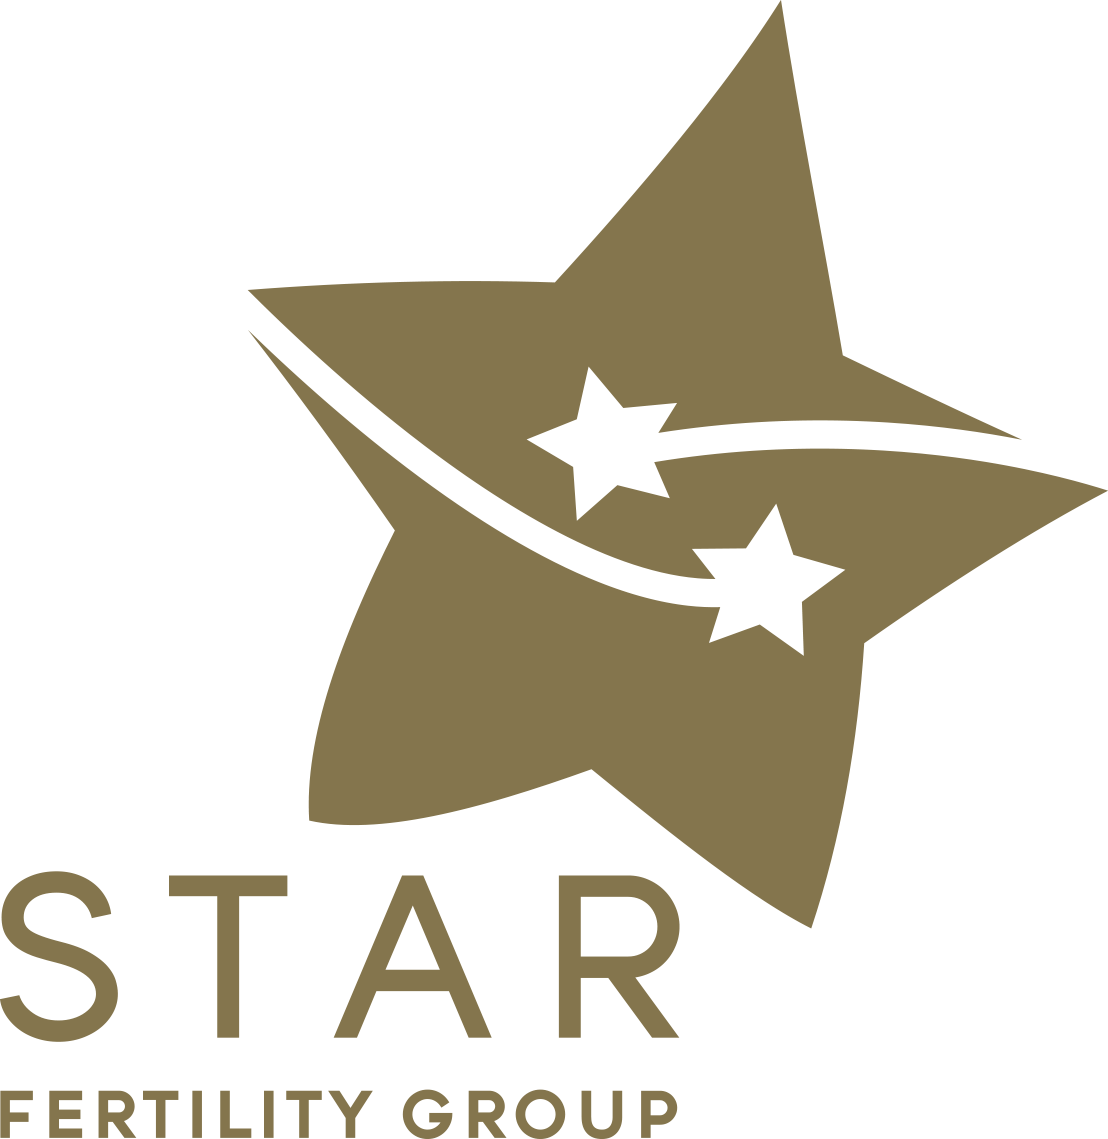 Star Fertility Group